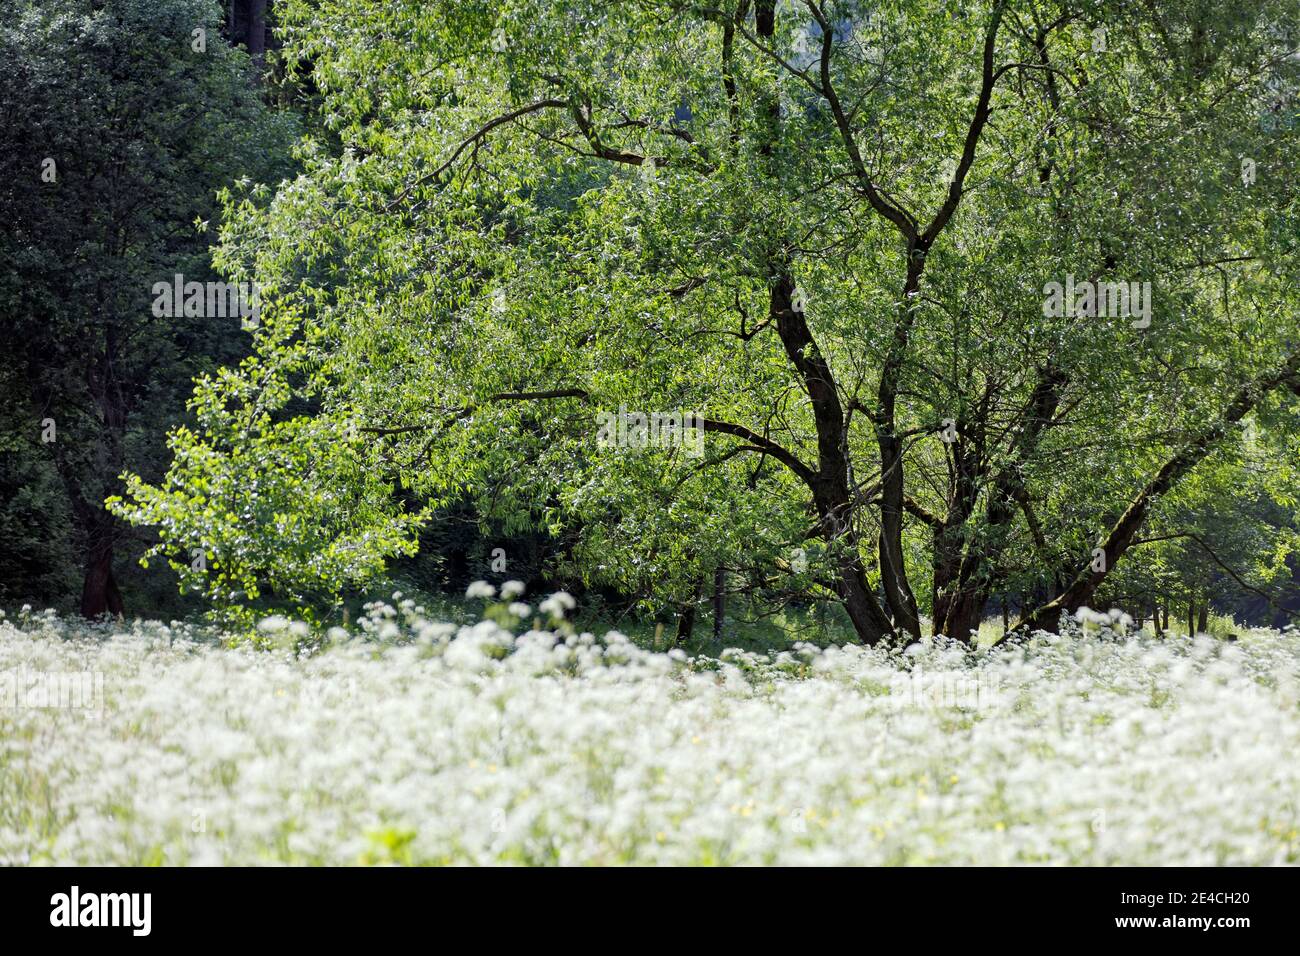 Germany, Thuringia, Gehren, floodplain, tree, meadow, blossoms, back light Stock Photo